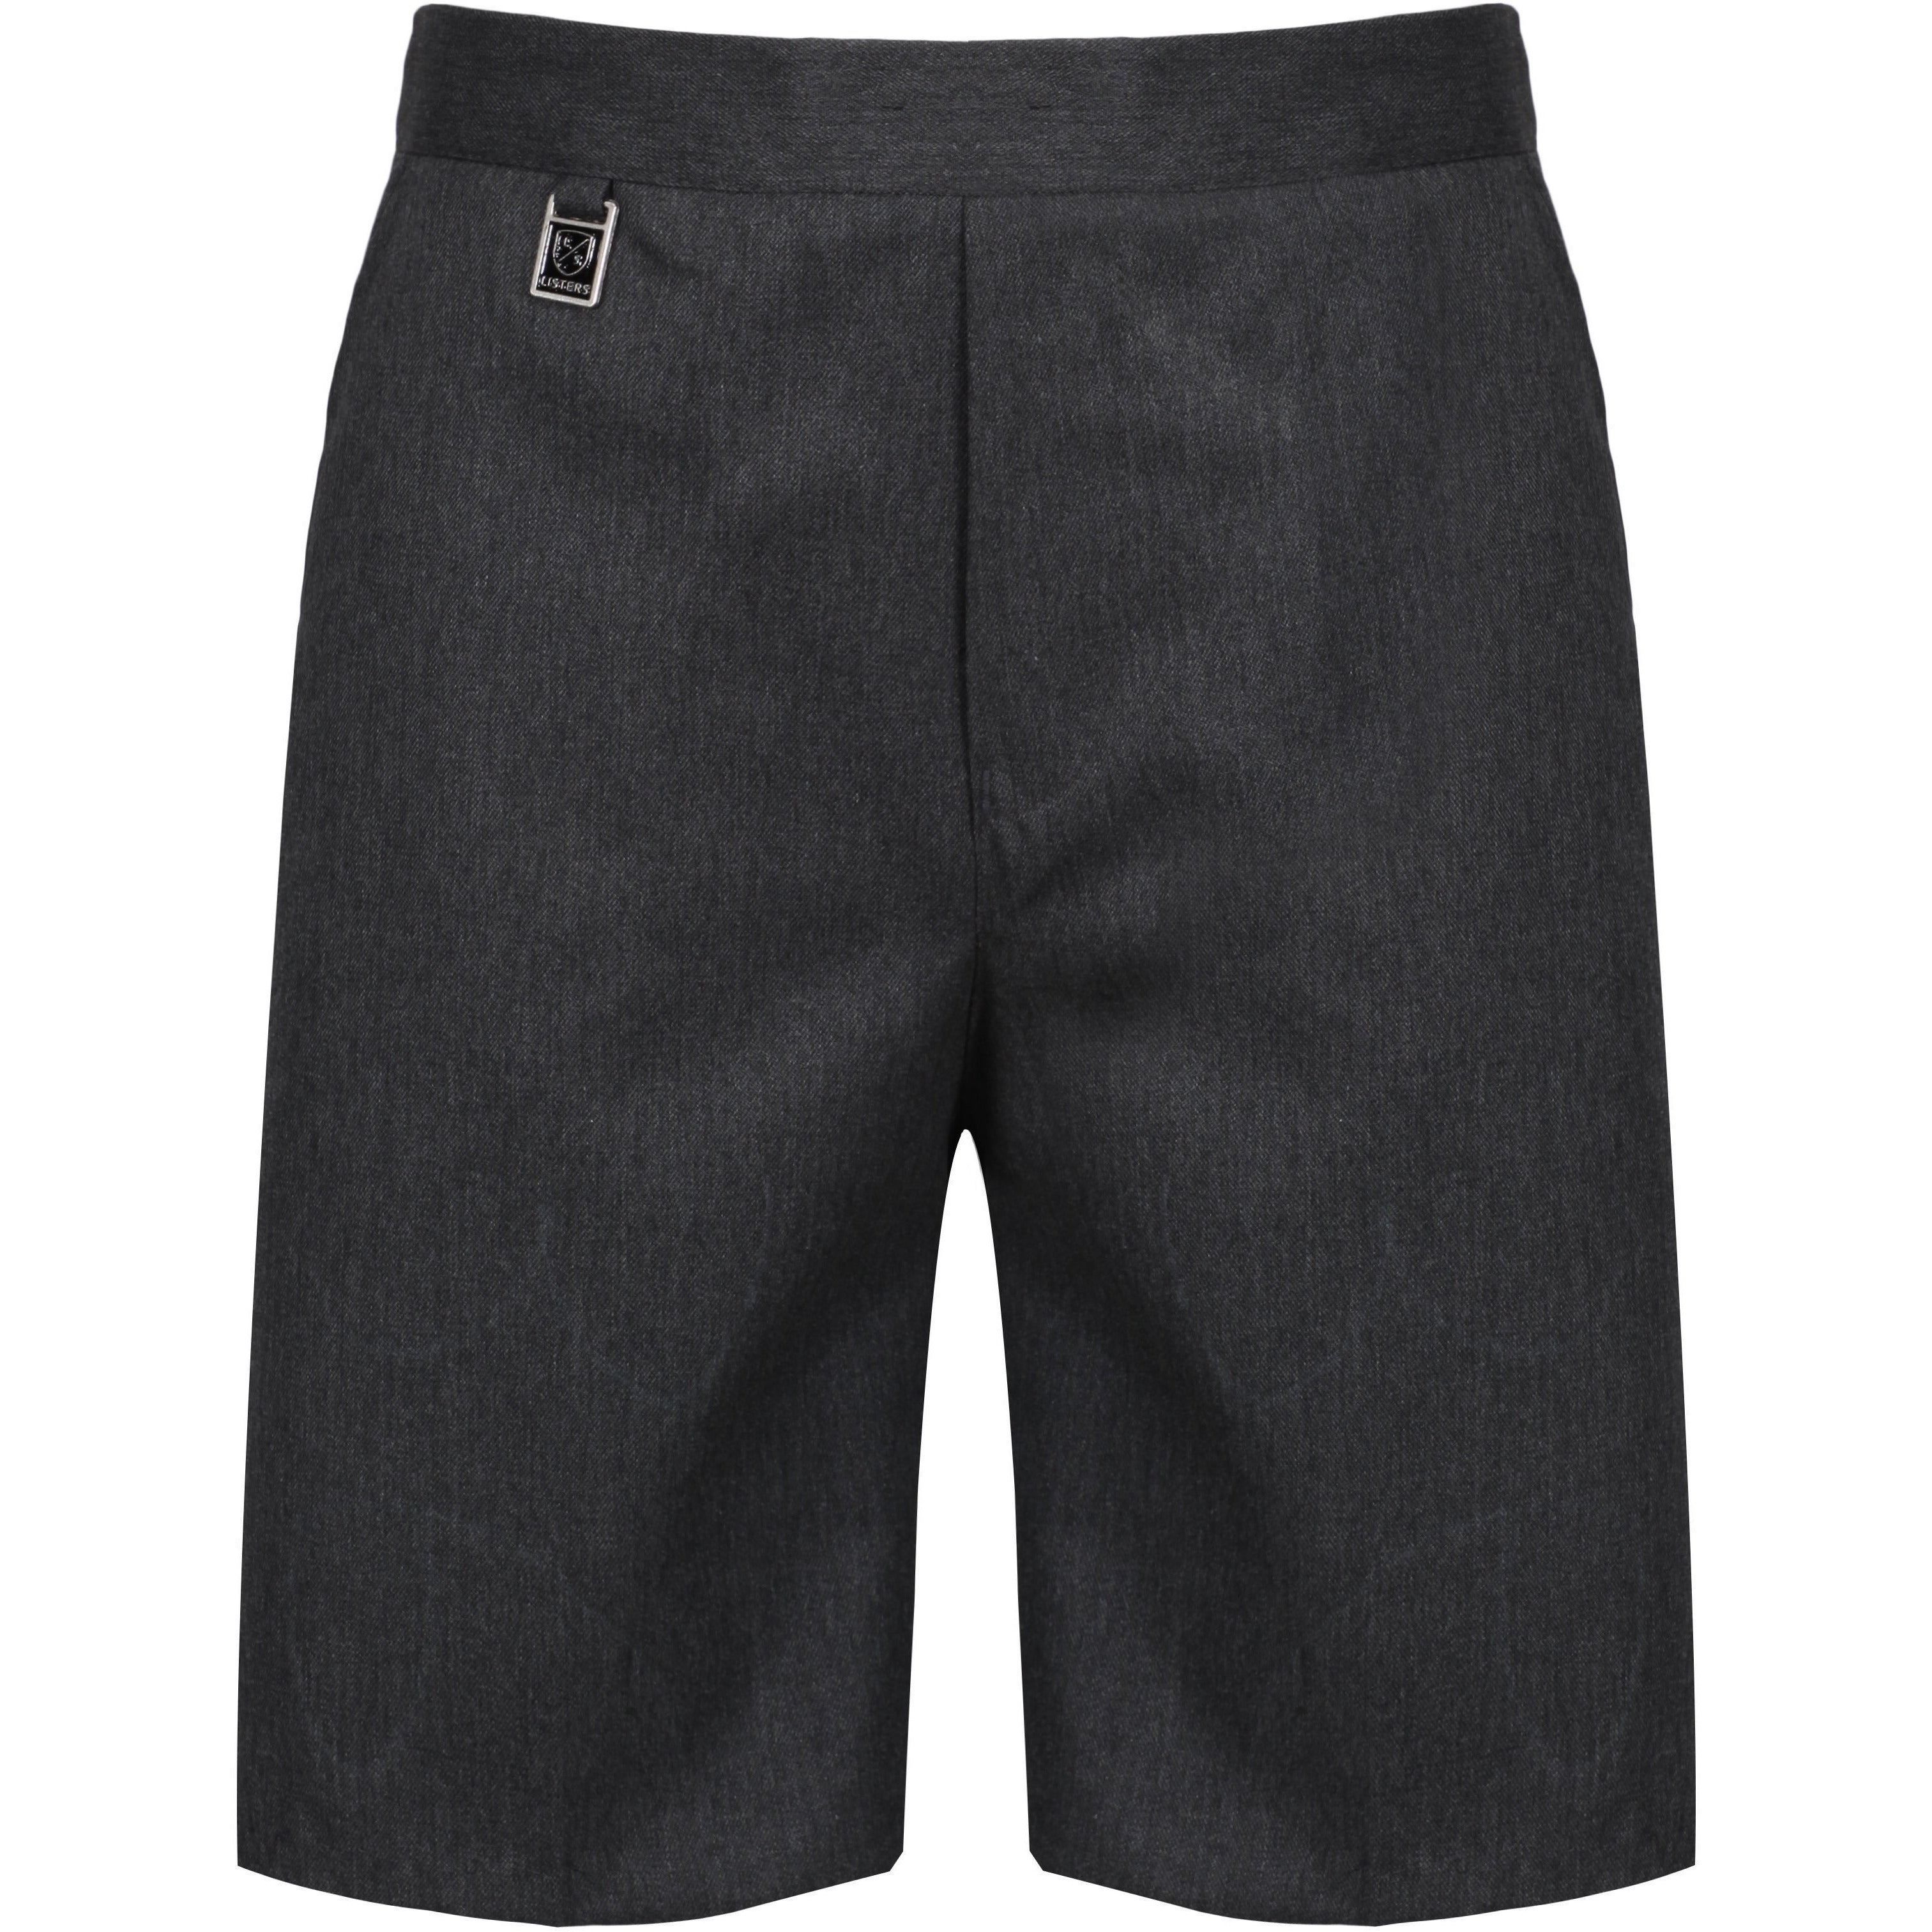 Boys Pull Up Shorts No Zip Ages 2 16 Elasticated School Uniform Shorts Black Grey Navy Listers Schoolwear